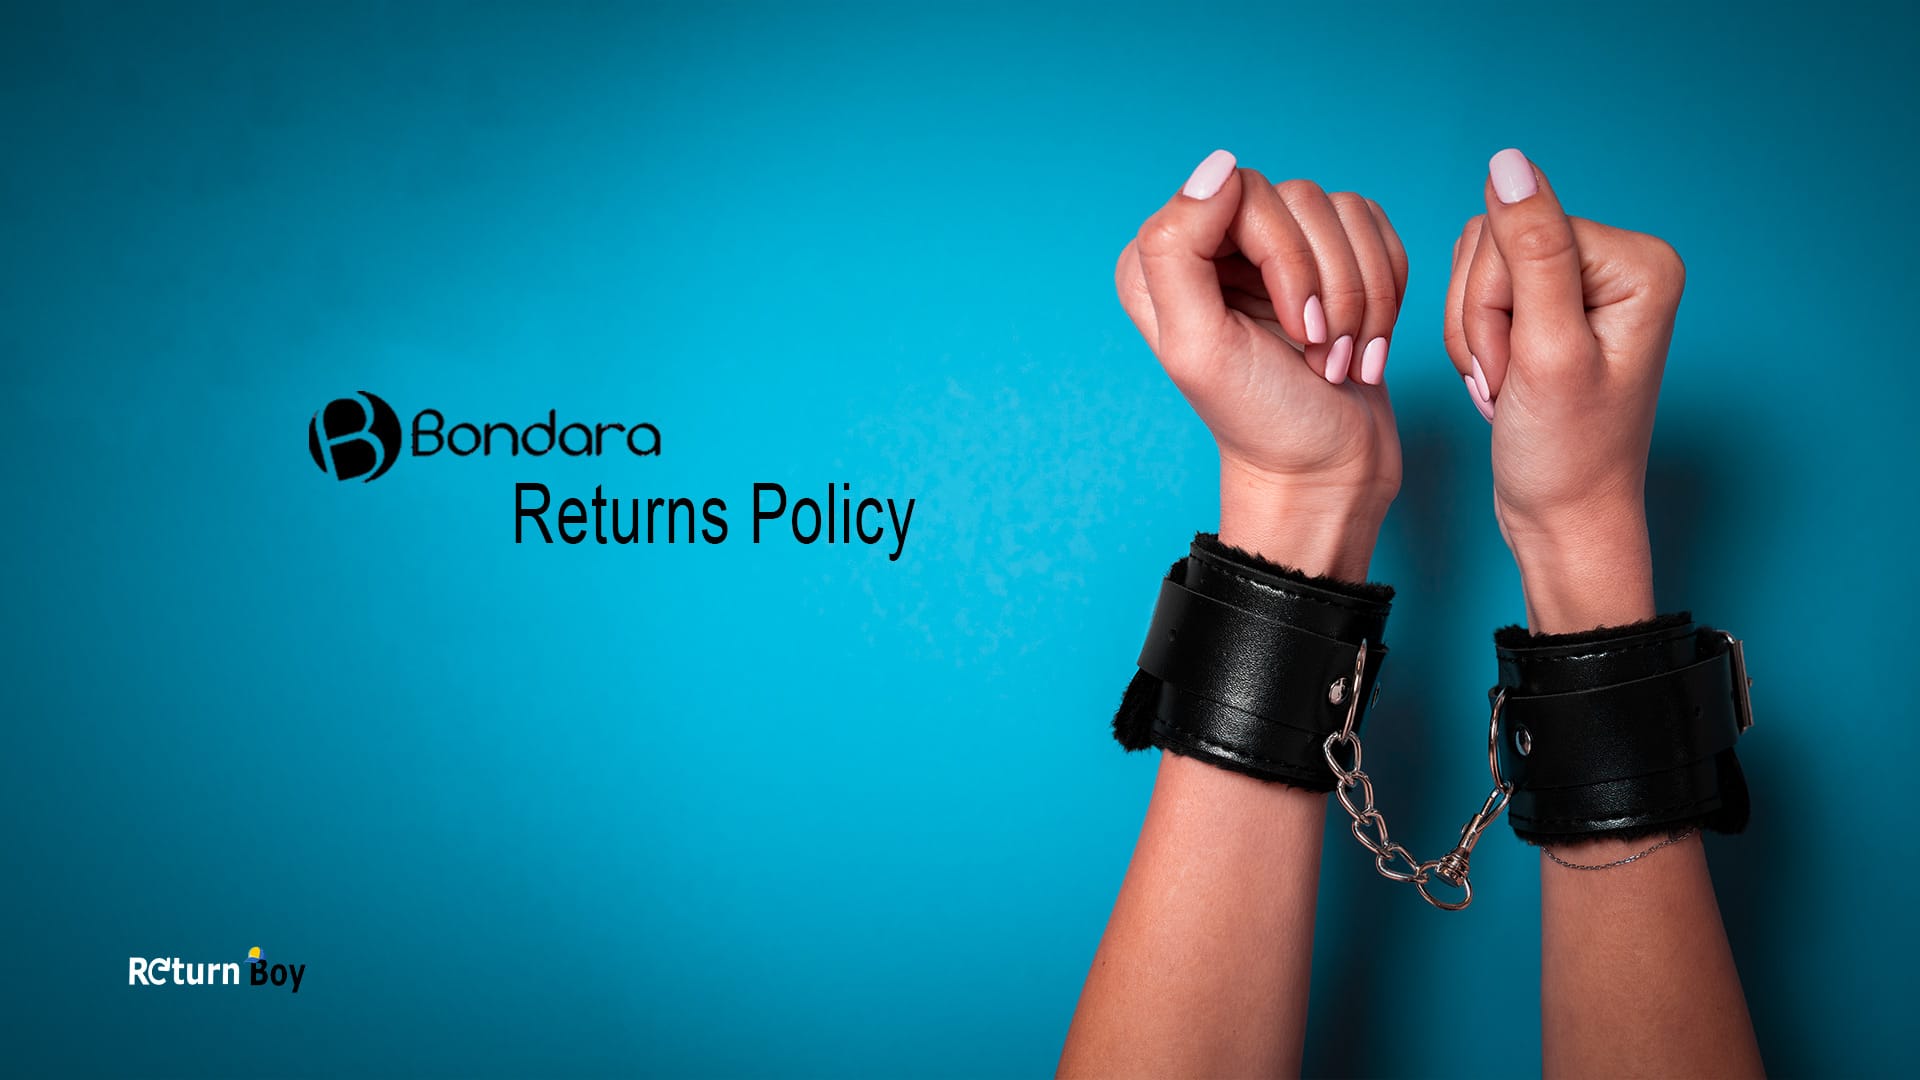 Bondara Returns Policy